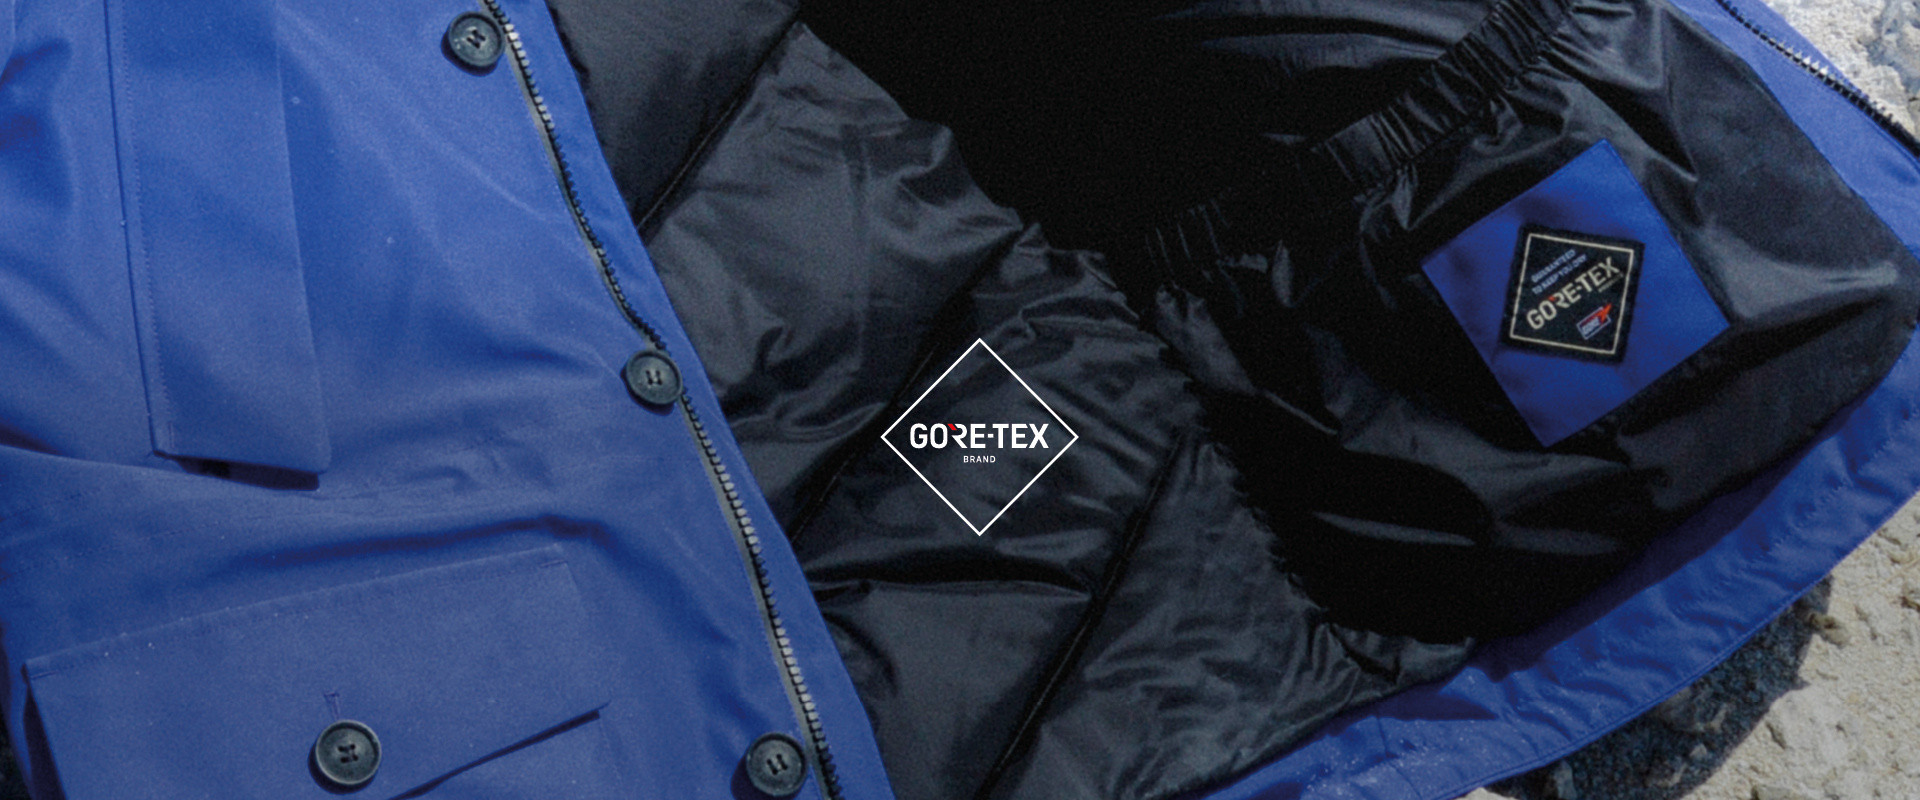 GORE-TEX / Woolrich - Waterproof Outerwear | Woolrich